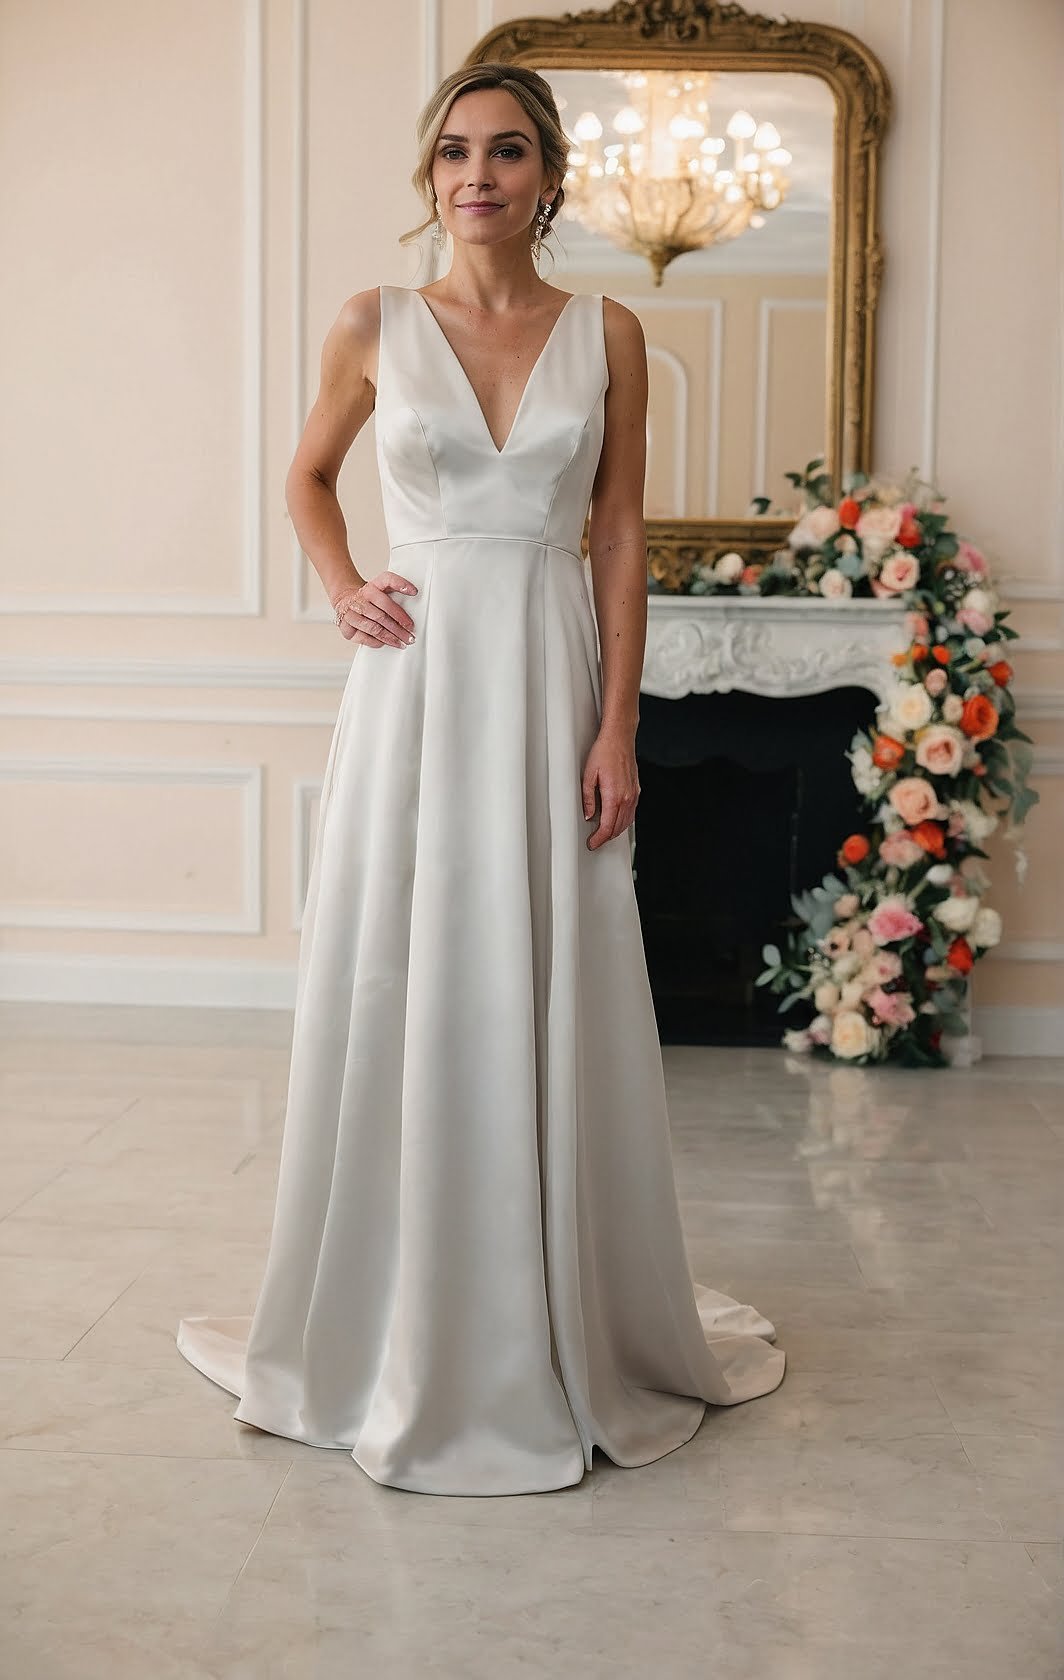 Elegant Simplicity: Classic White A-Line Bridal Gown